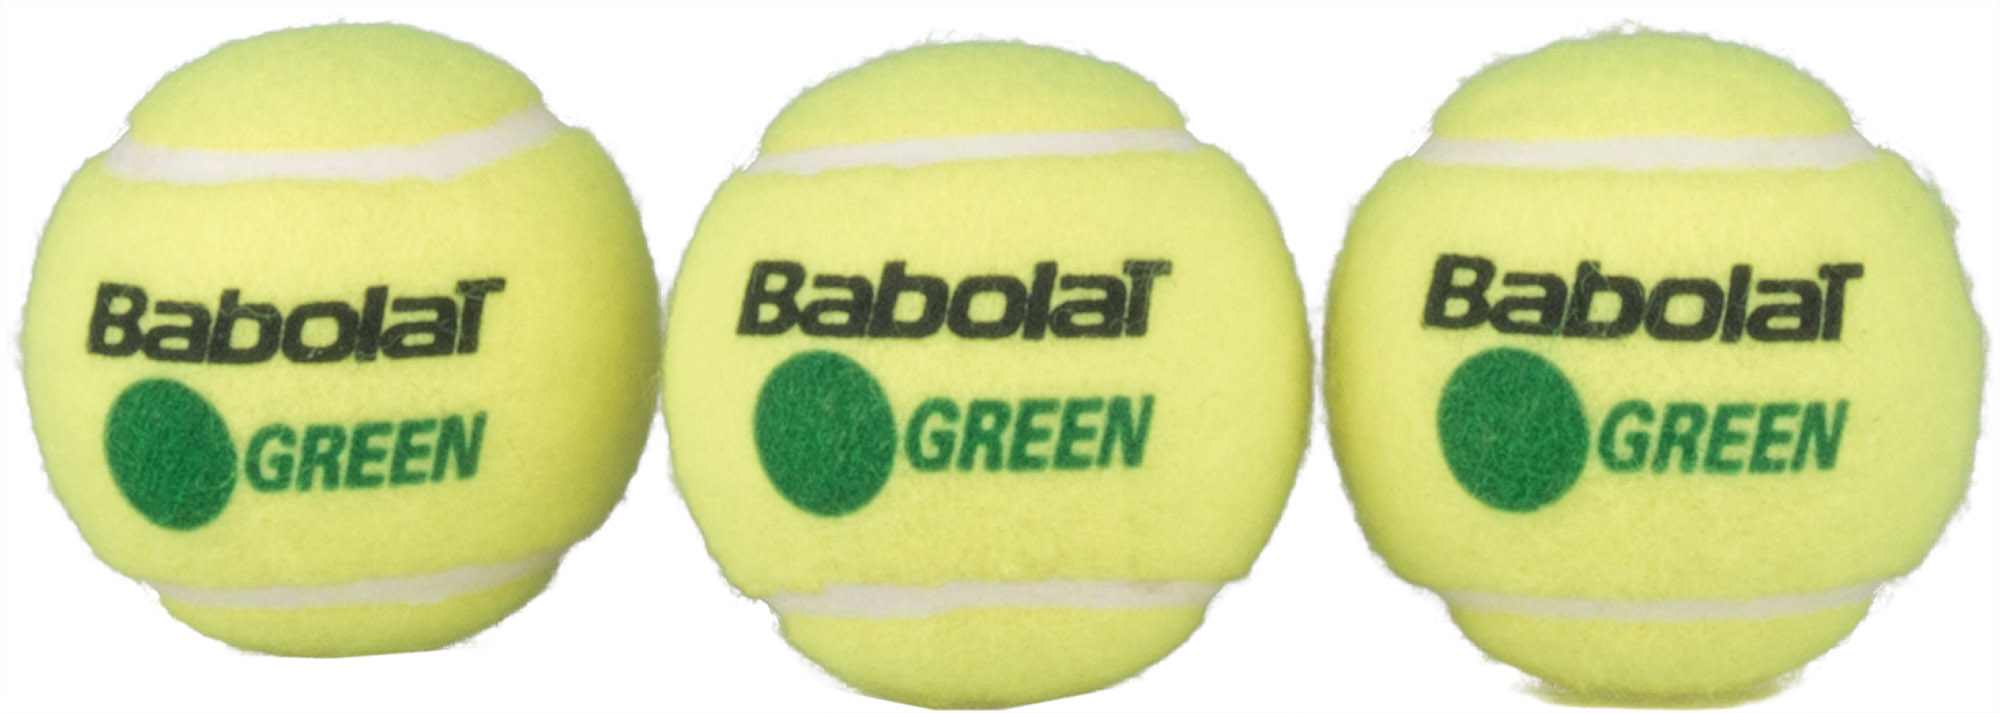 Tennis racket with balls